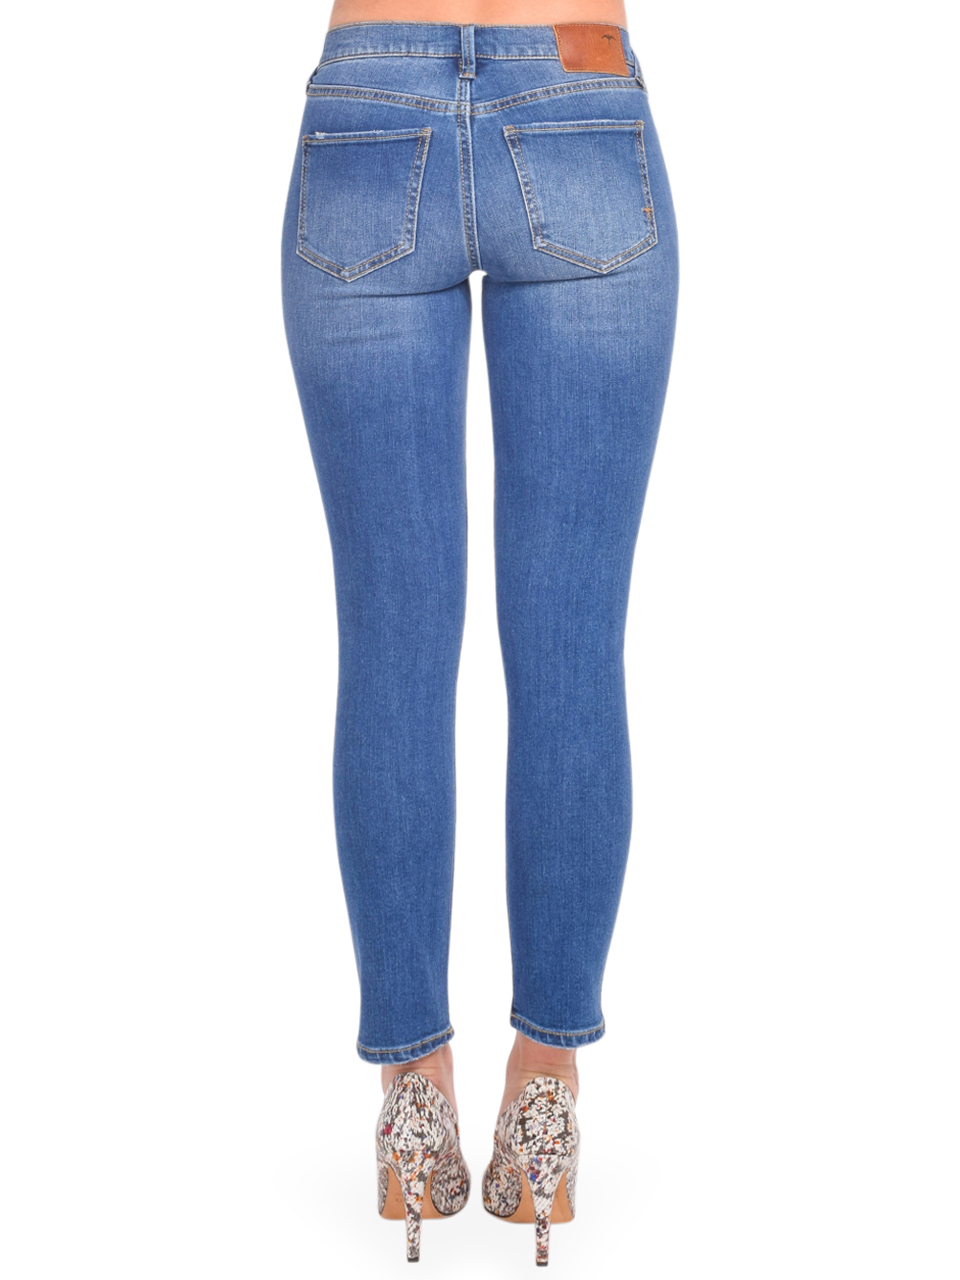 SERRA Mid Rise Skinny Jean in Crestline Blue Back View 